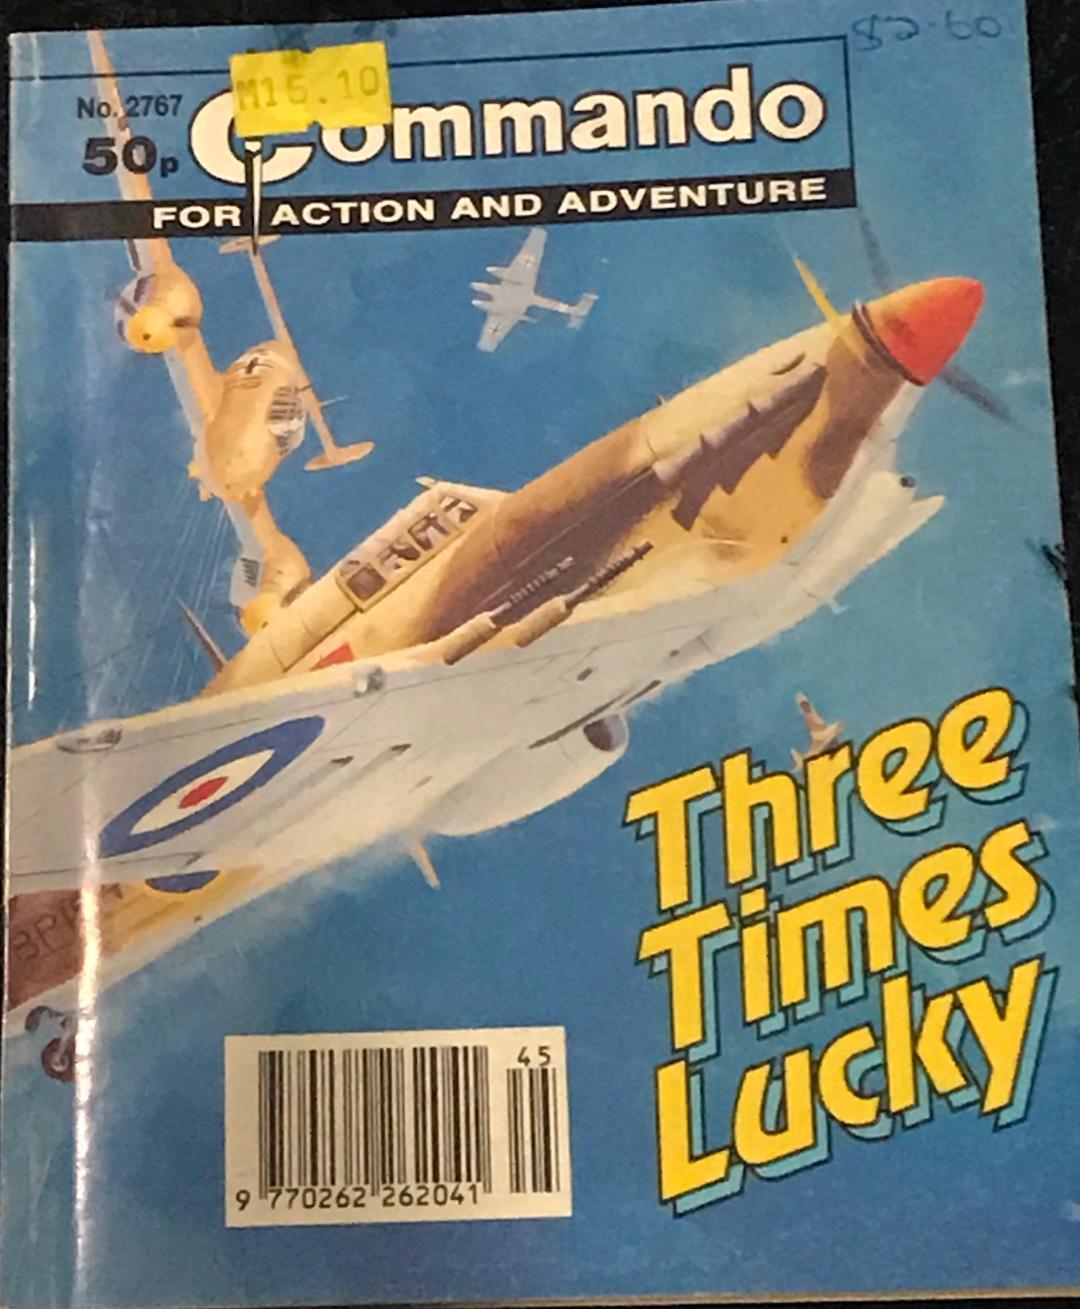 Three Times Lucky Commando Comics Wiki Fandom